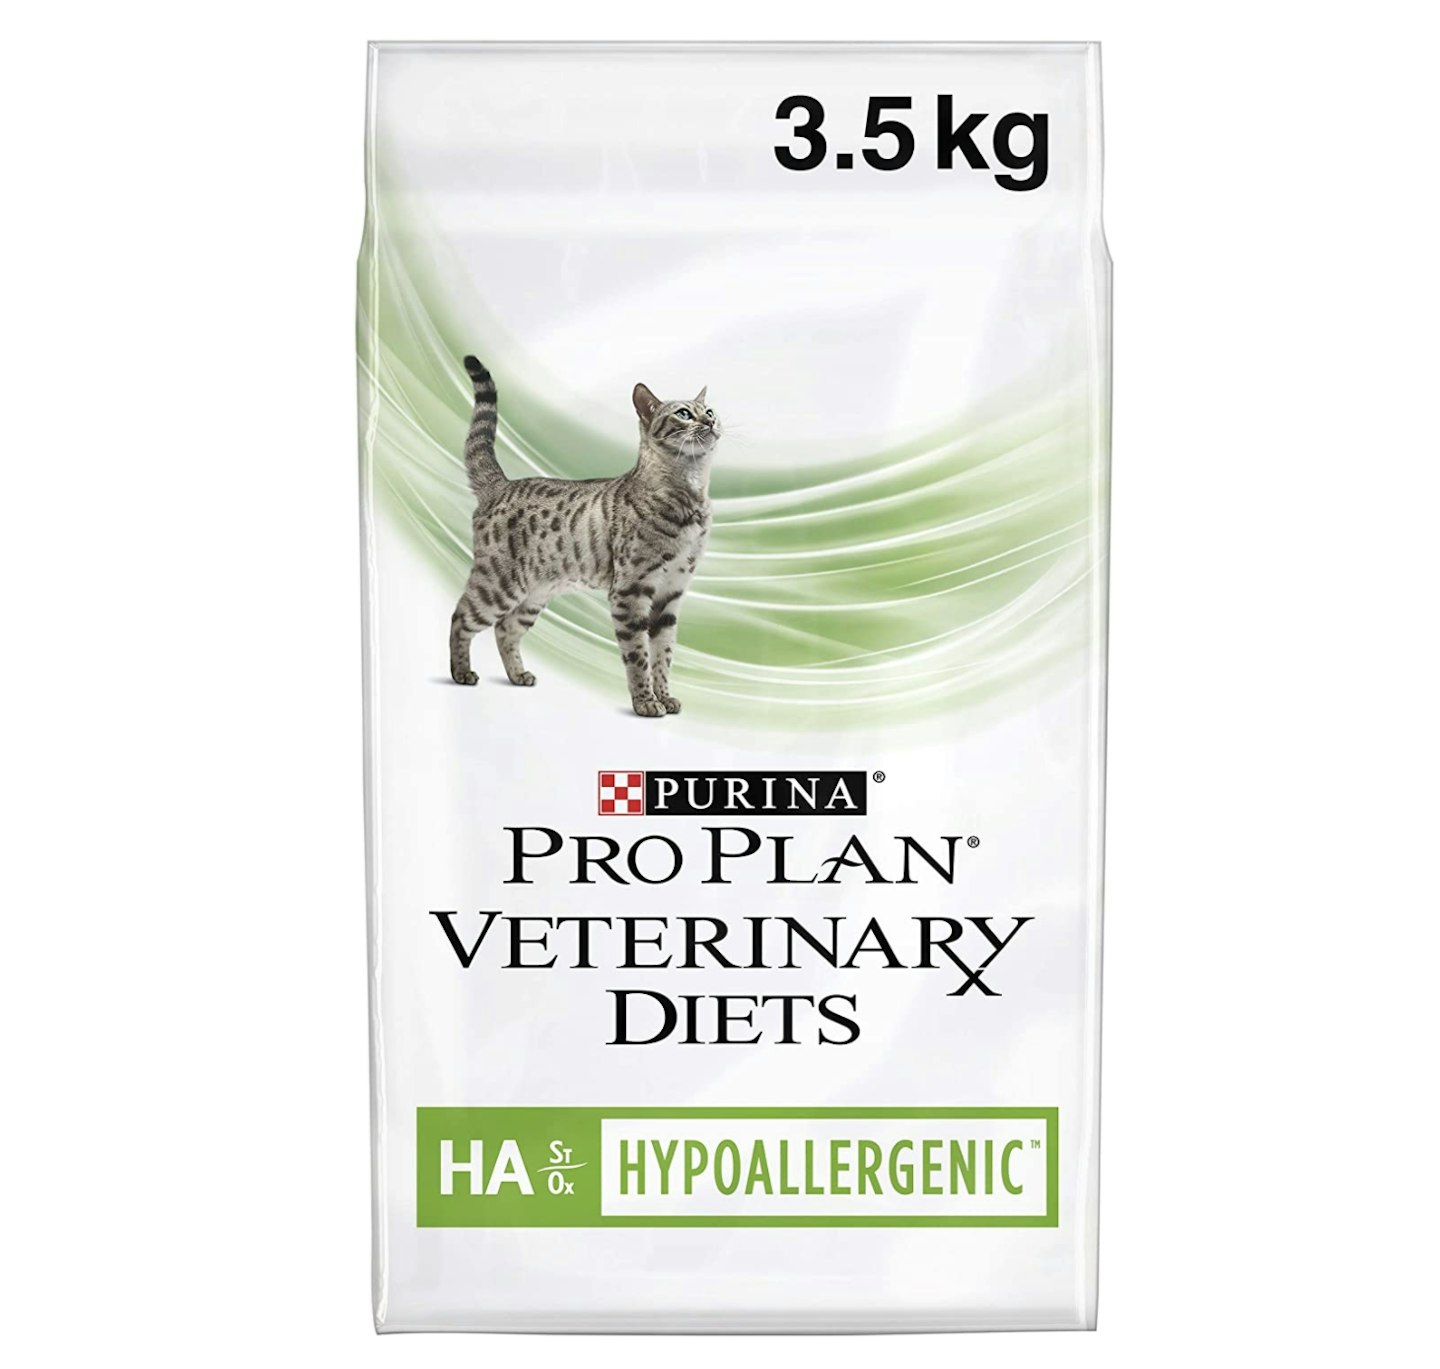 PRO PLAN Veterinary Diets Feline HA Hypoallergenic Dry Cat Food